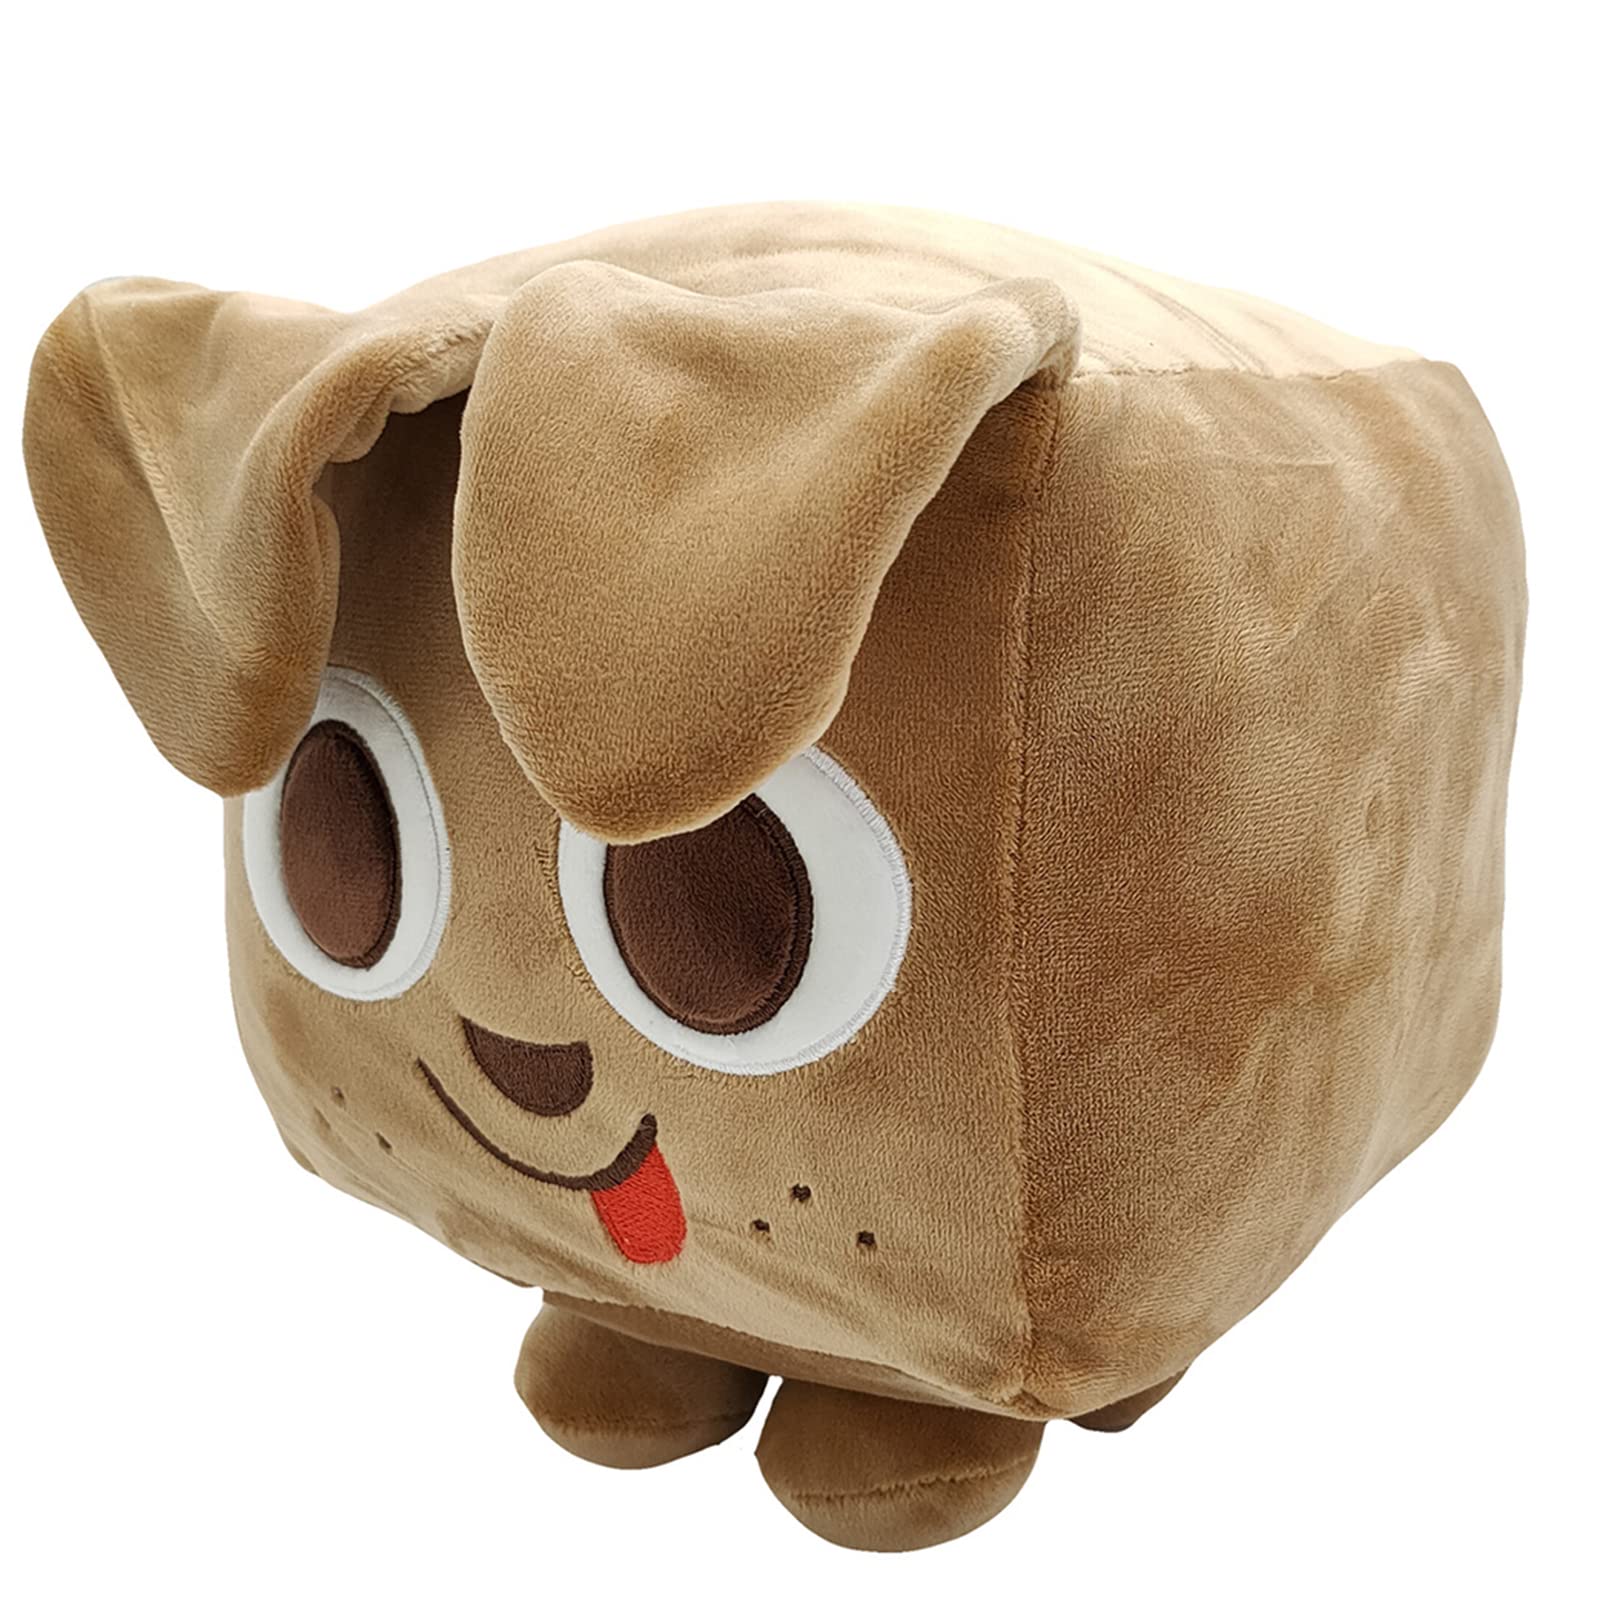 Grey Dog Stuffed Animal Cute Kawaii Soft Toy for Kids and Fans